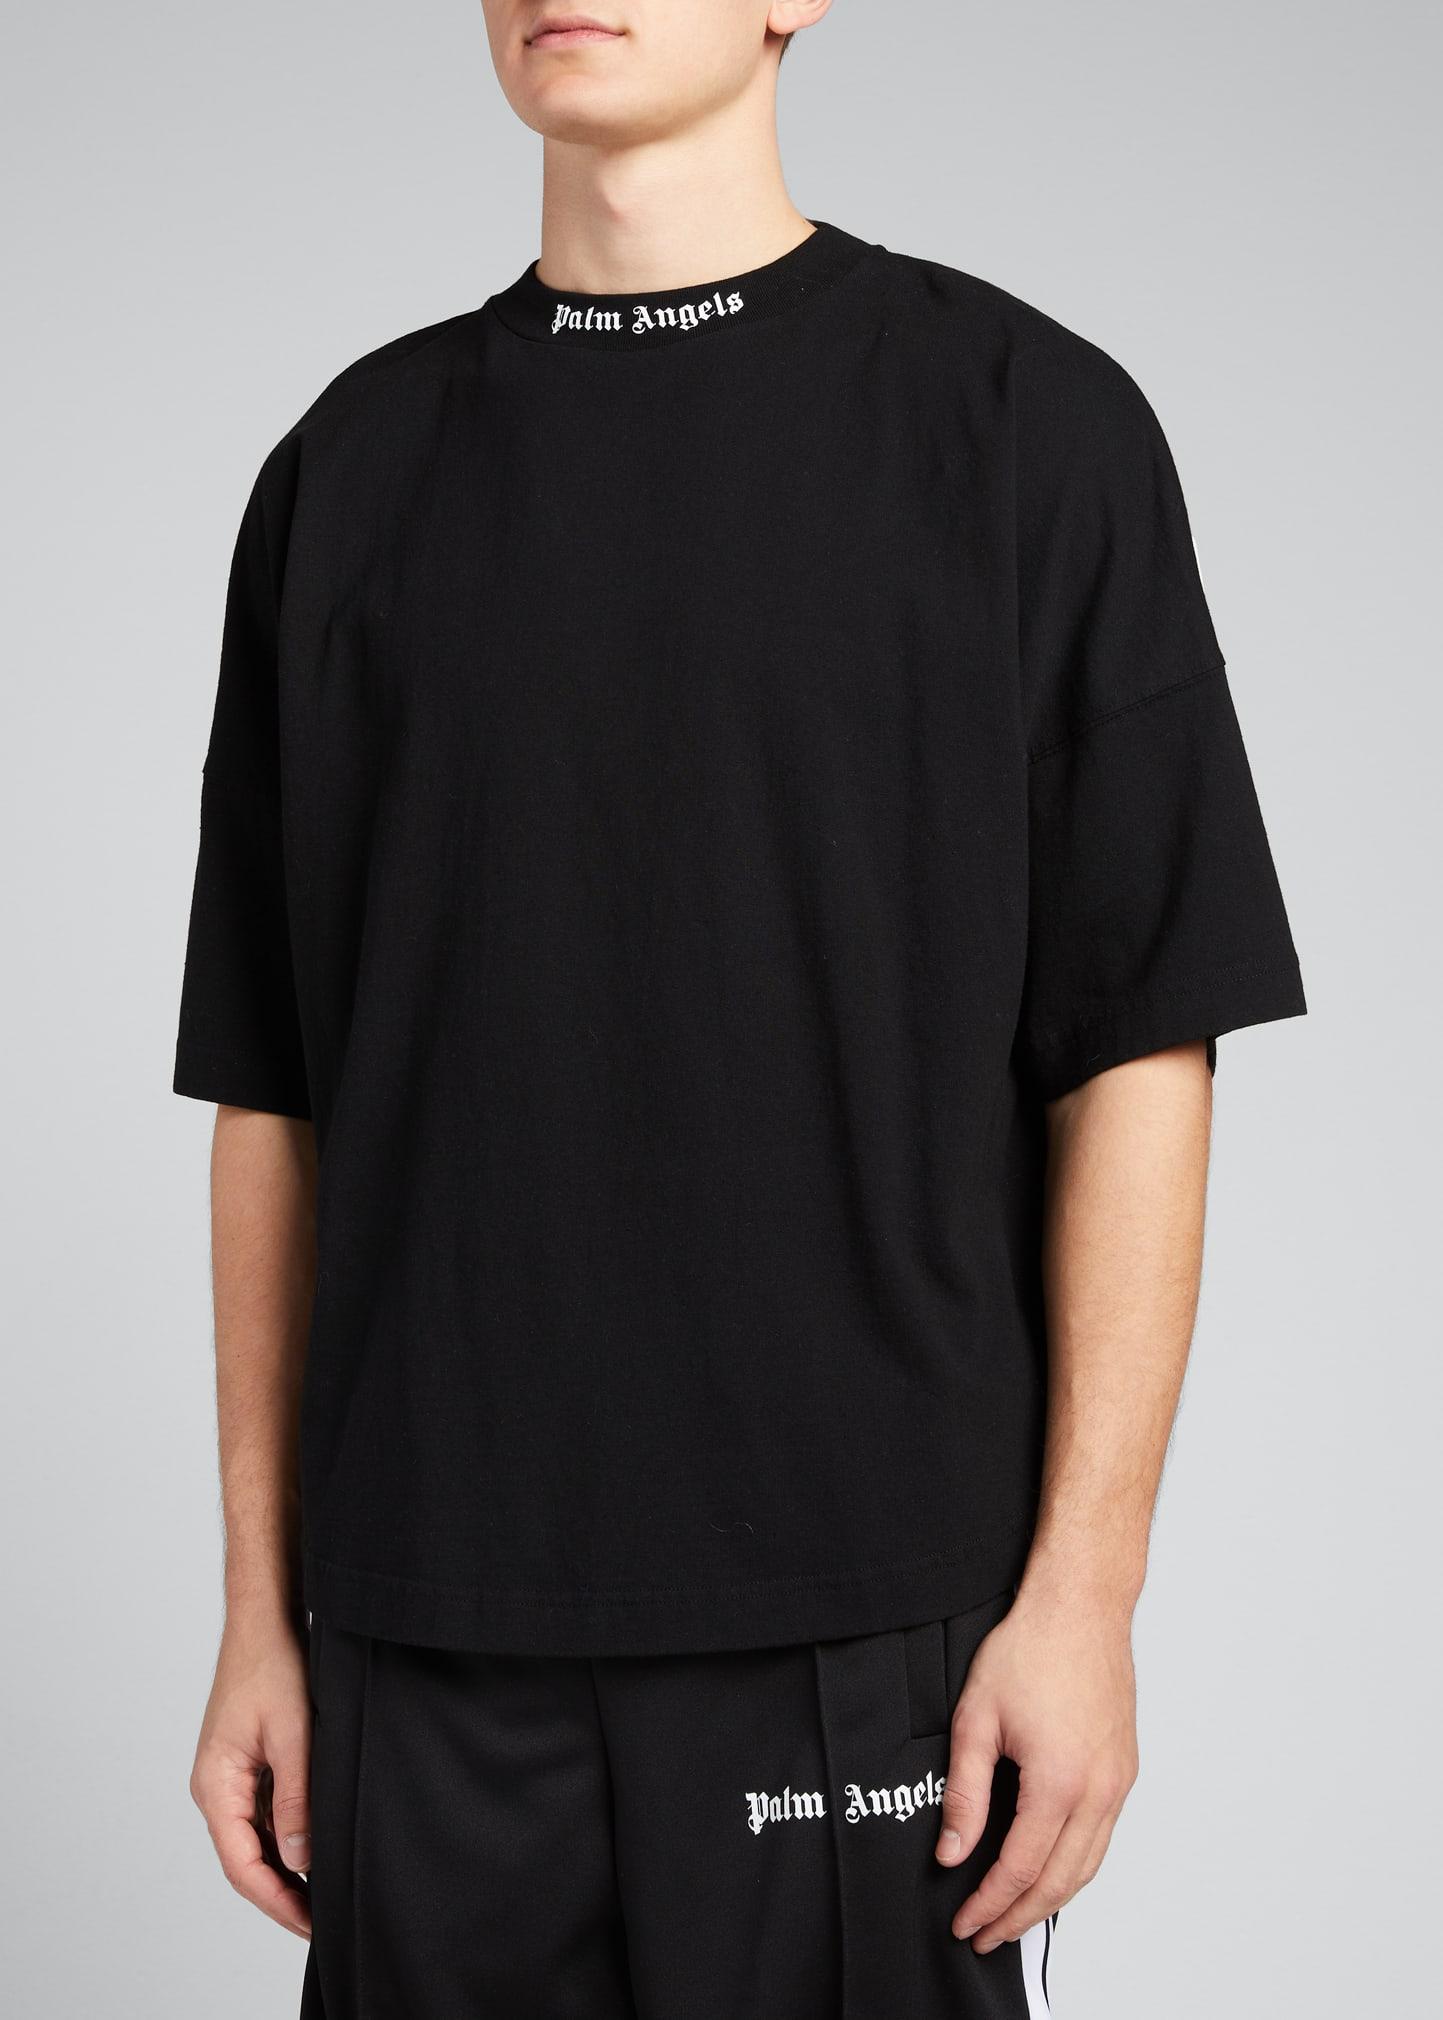 Palm Angels Oversized Mock-neck Logo T-shirt in Black for Men